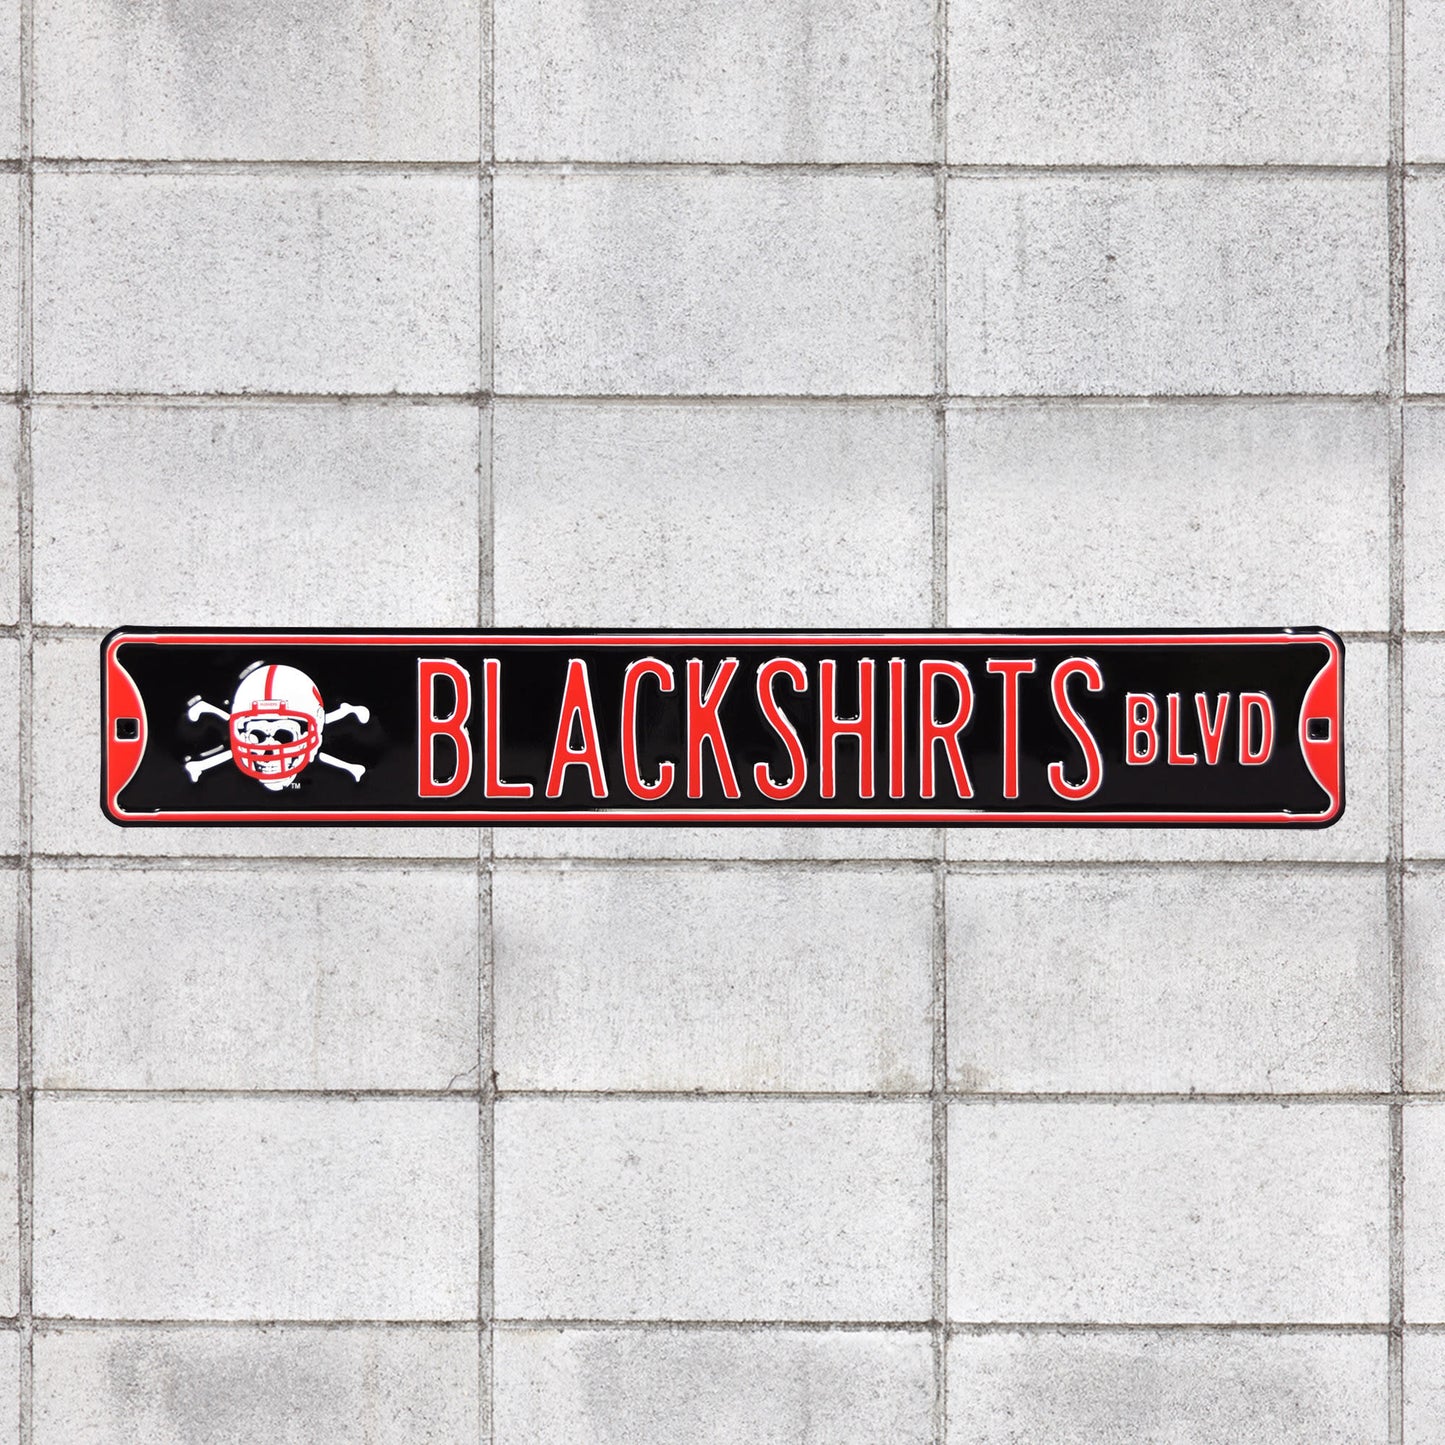 Nebraska Cornhuskers: Blackshirts Blvd - Officially Licensed Metal Street Sign